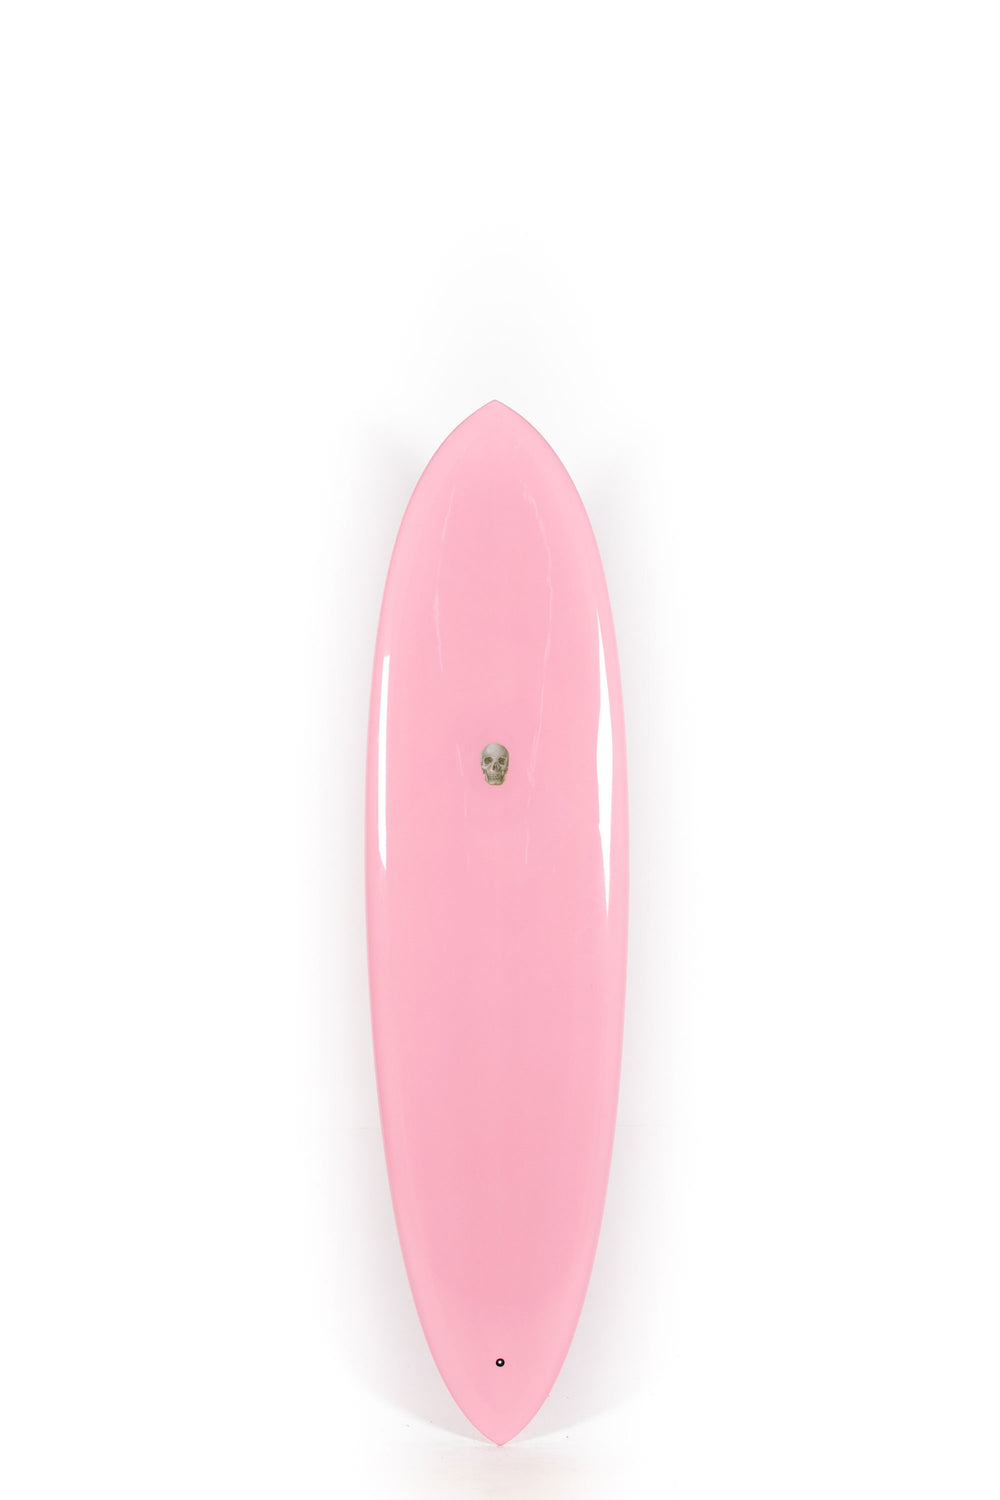 Christenson Surfboards - C-BUCKET - 6'10